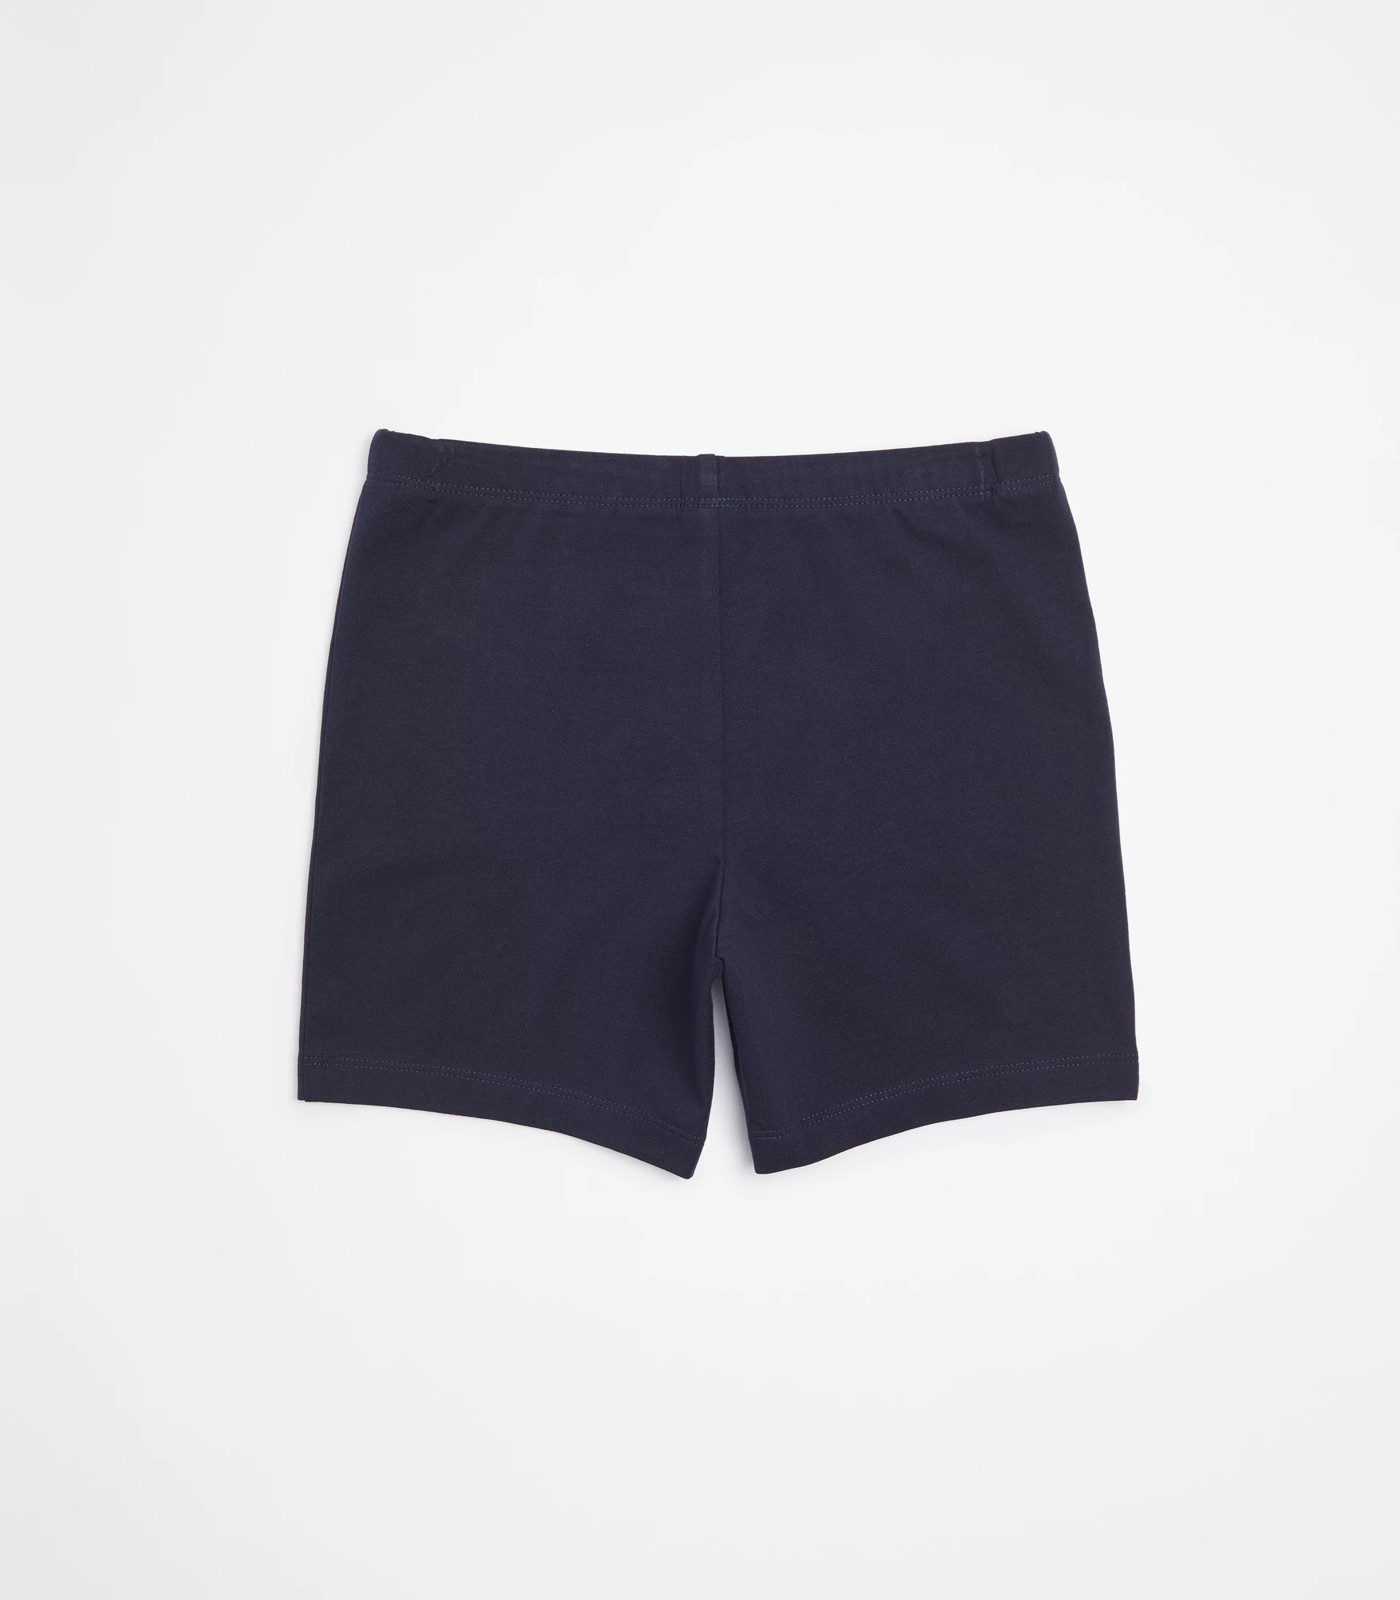 Bike Shorts - Short Length - Navy Blue | Target Australia